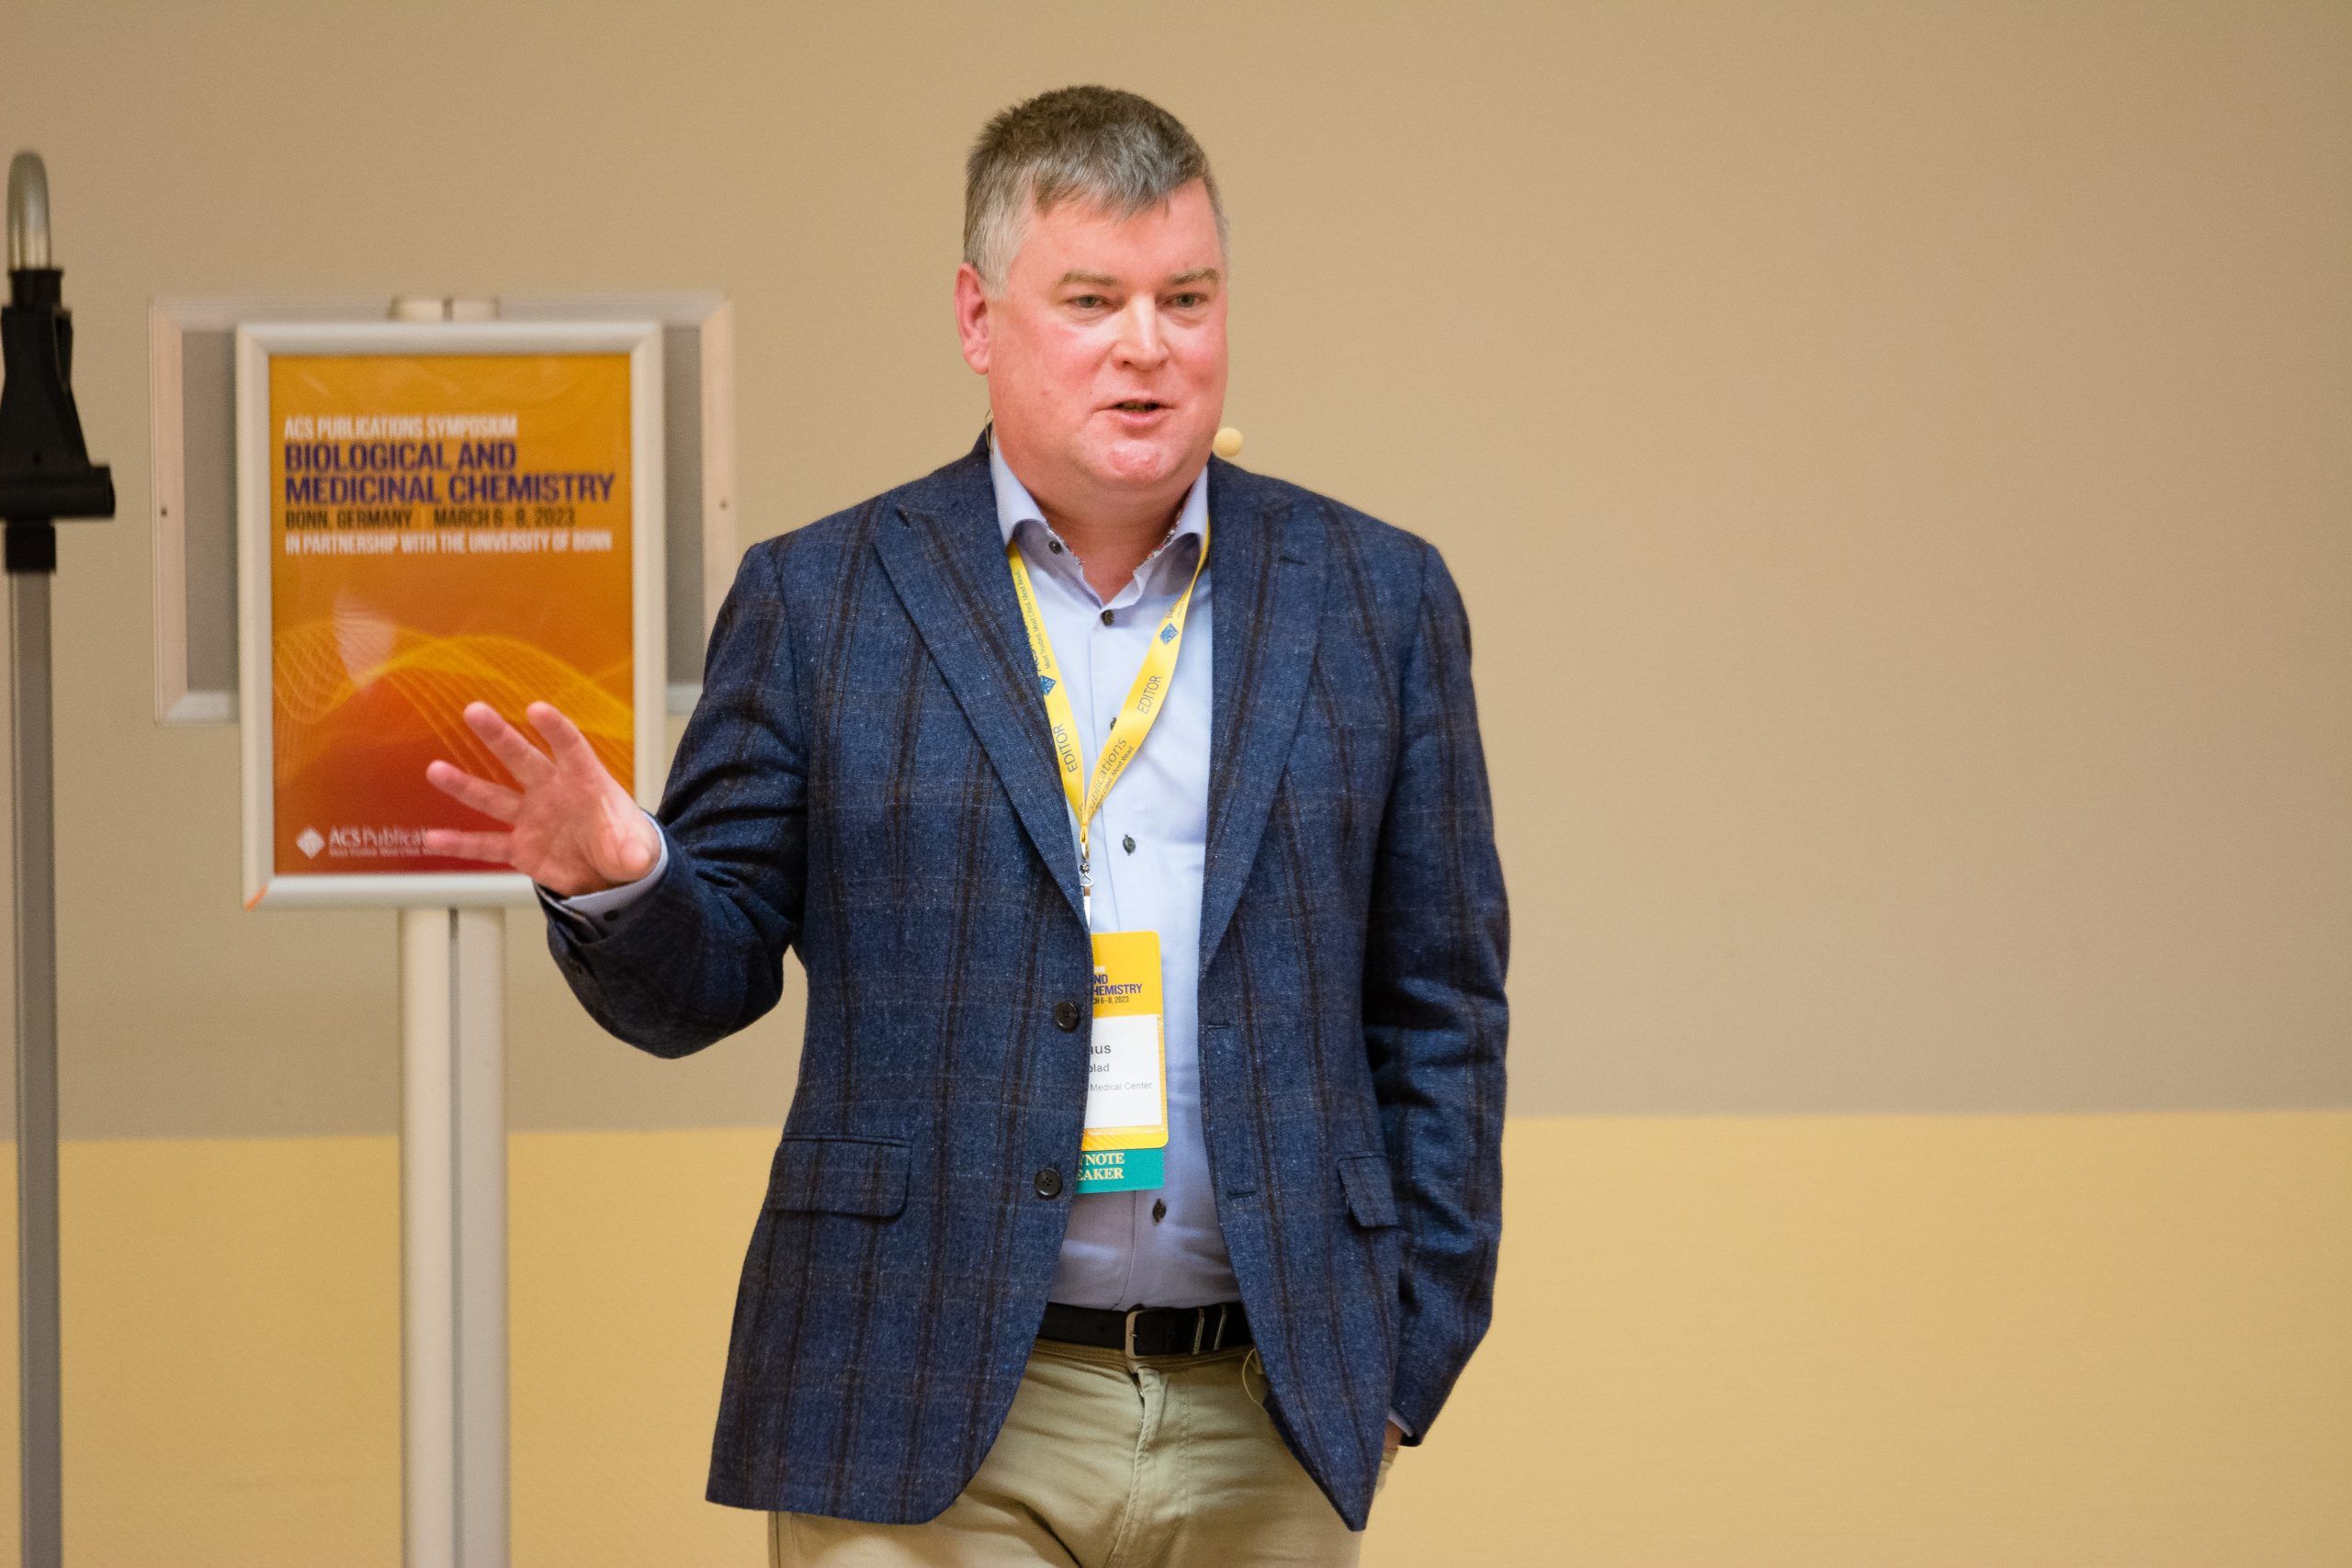 A speaker presenting at the Bonn Symposium